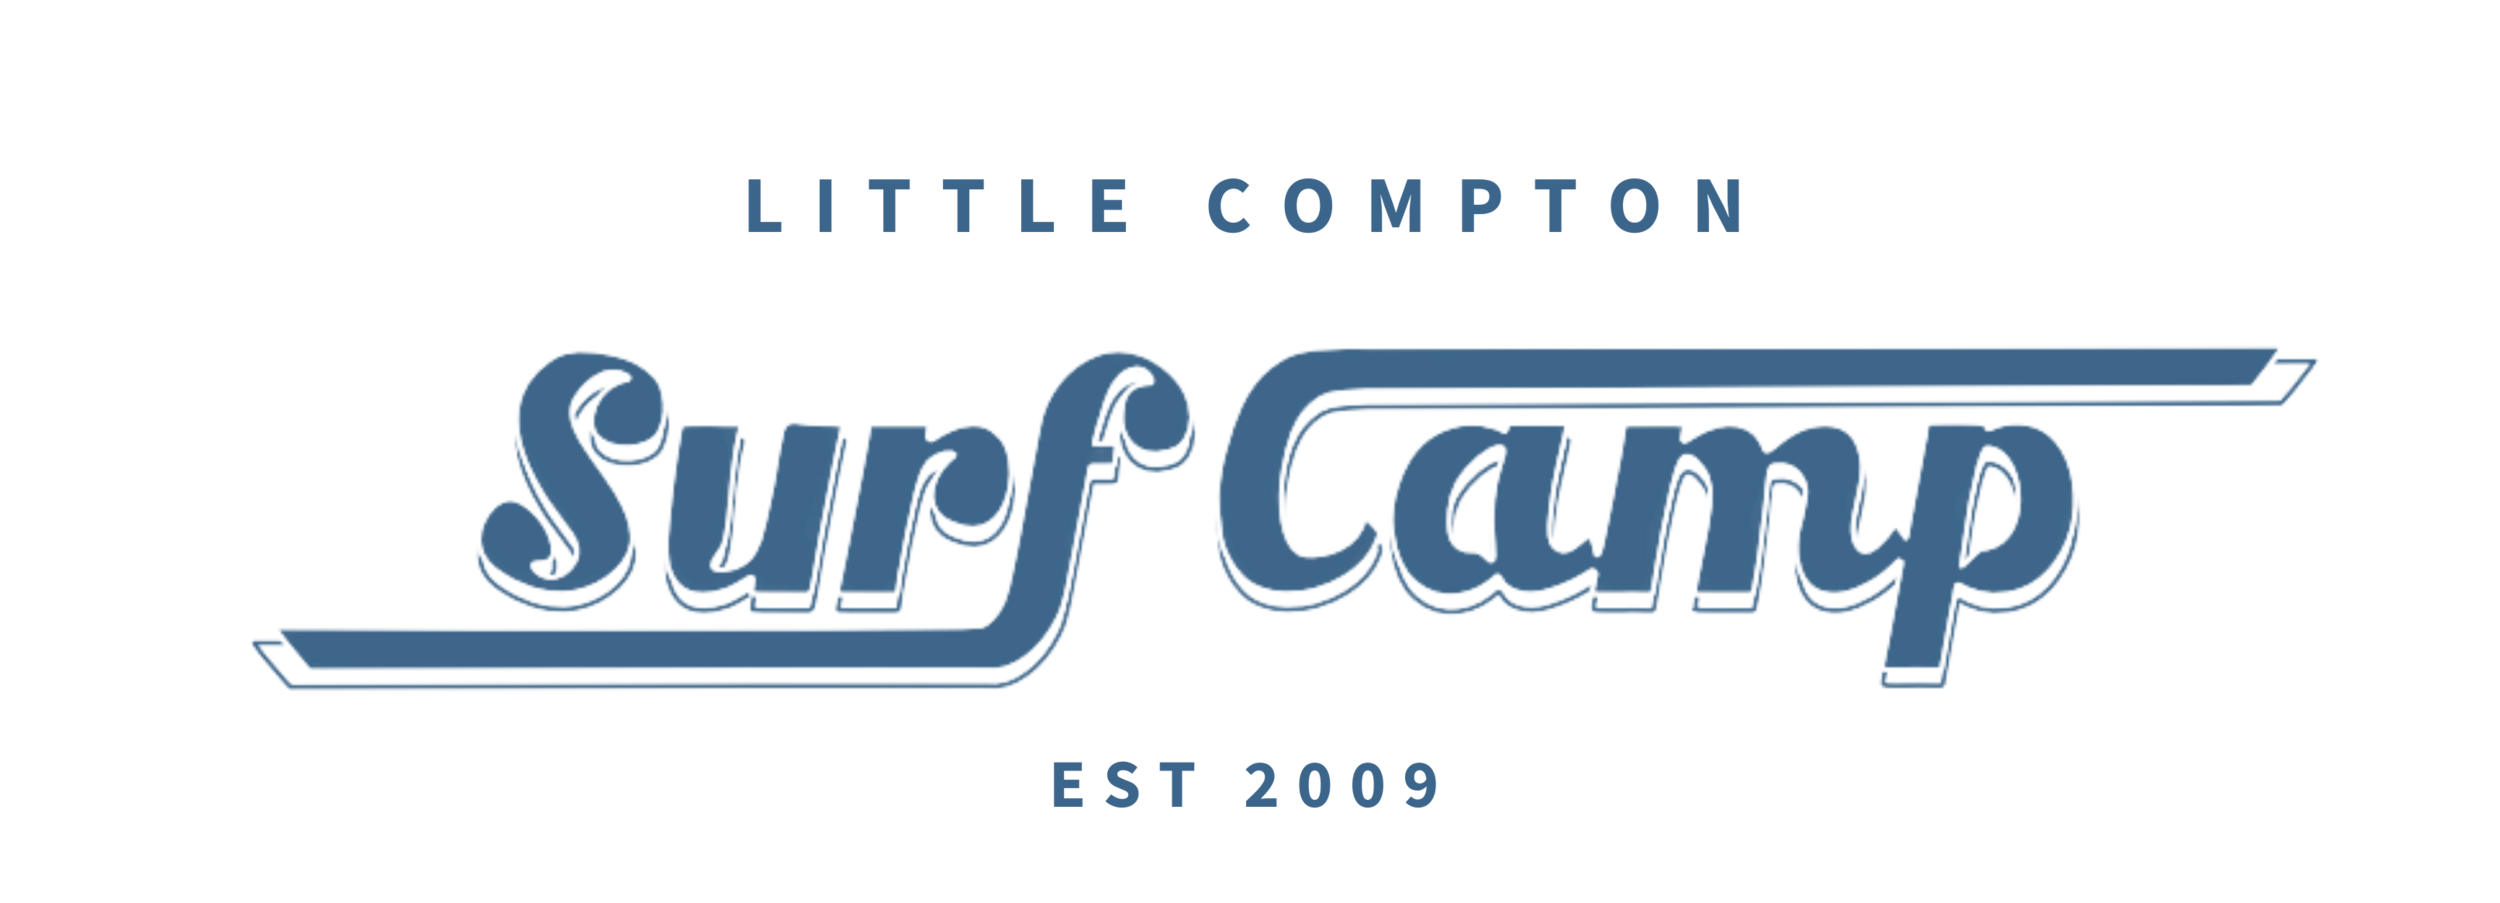 LITTLE COMPTON SURF CAMP